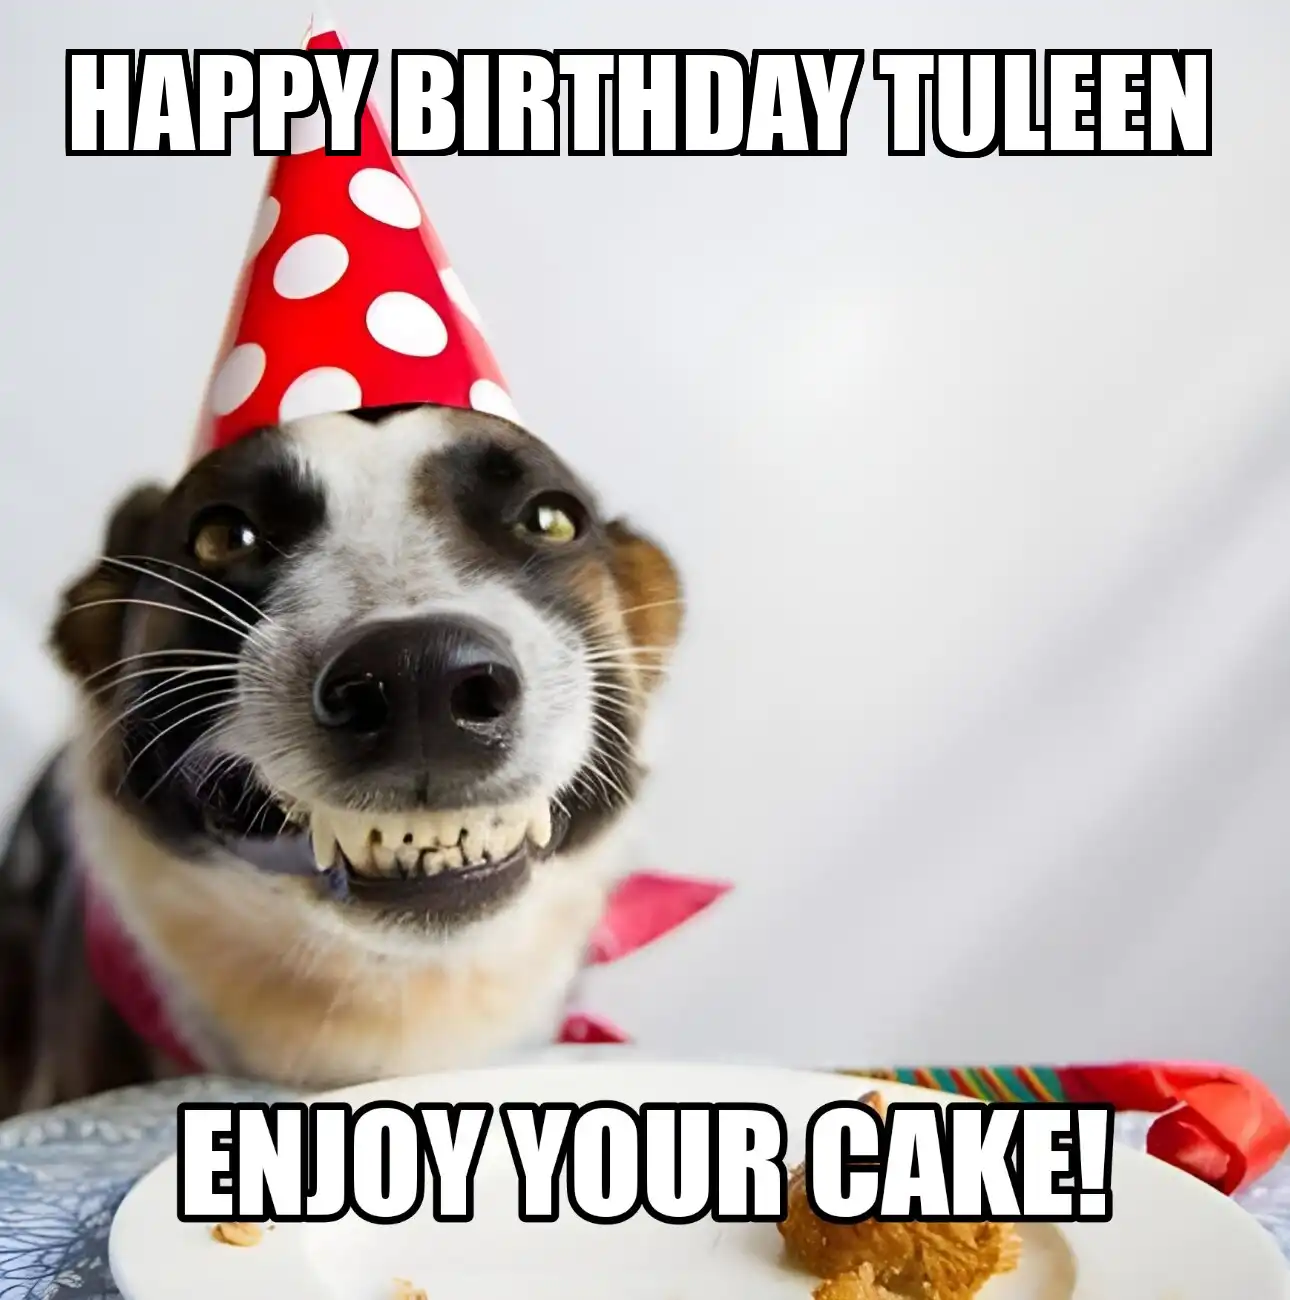 Happy Birthday Tuleen Enjoy Your Cake Dog Meme